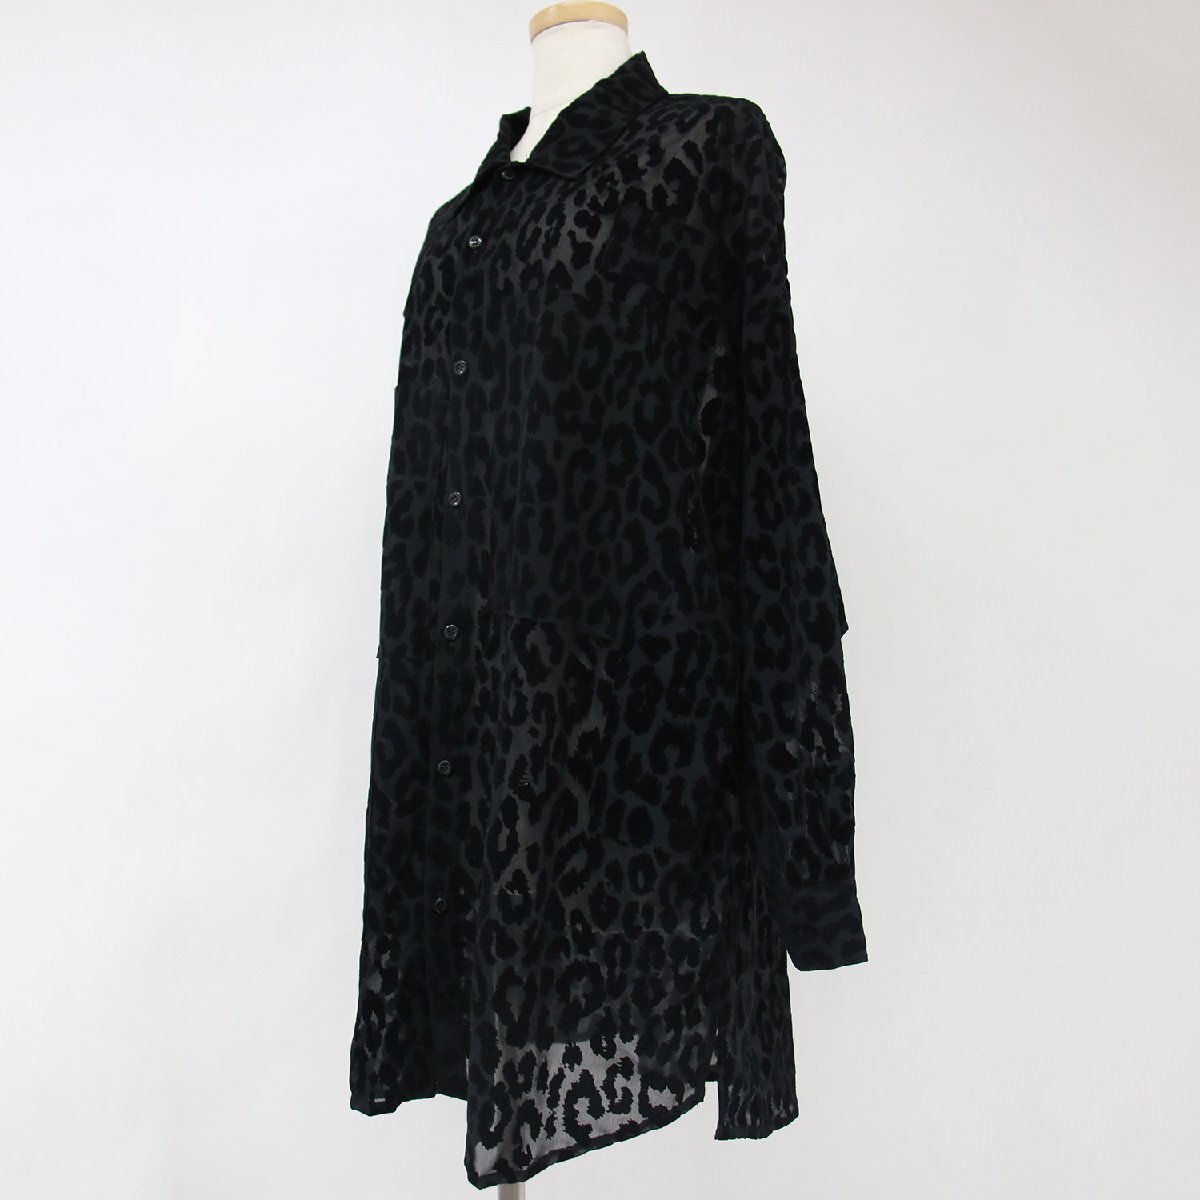 HYSTERIC GLAMOUR Hysteric Glamour рубашка черный чёрный FREE леопардовая расцветка Leopard sia- большой размер tops cut and sewn 